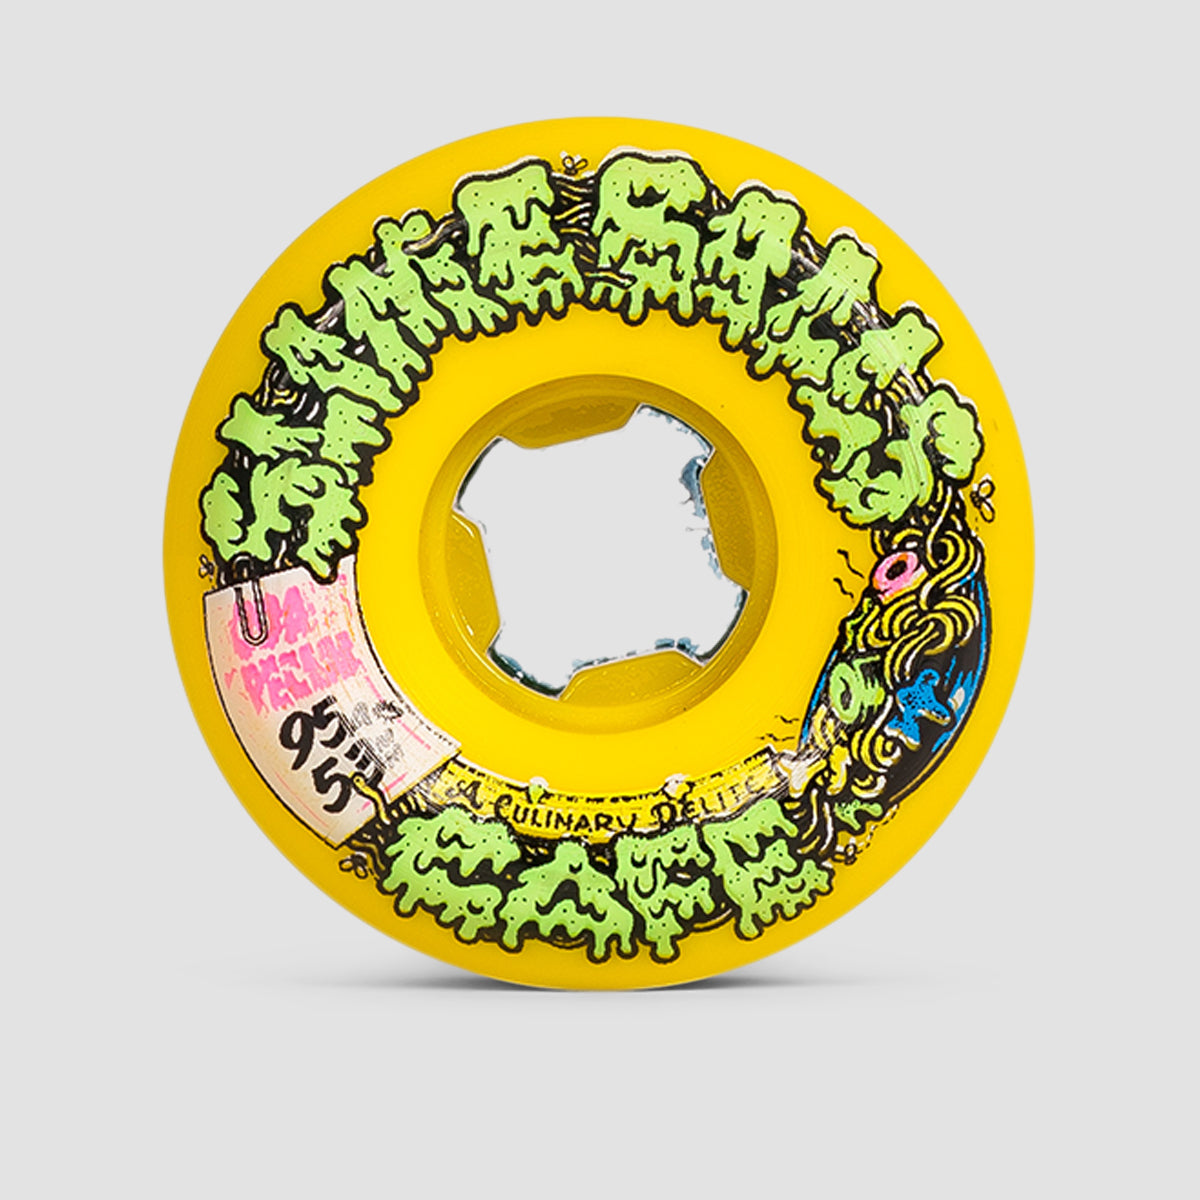 Slime Balls Double Take Cafe Vomit Mini 95a Skateboard Wheels Yellow/Black 53mm